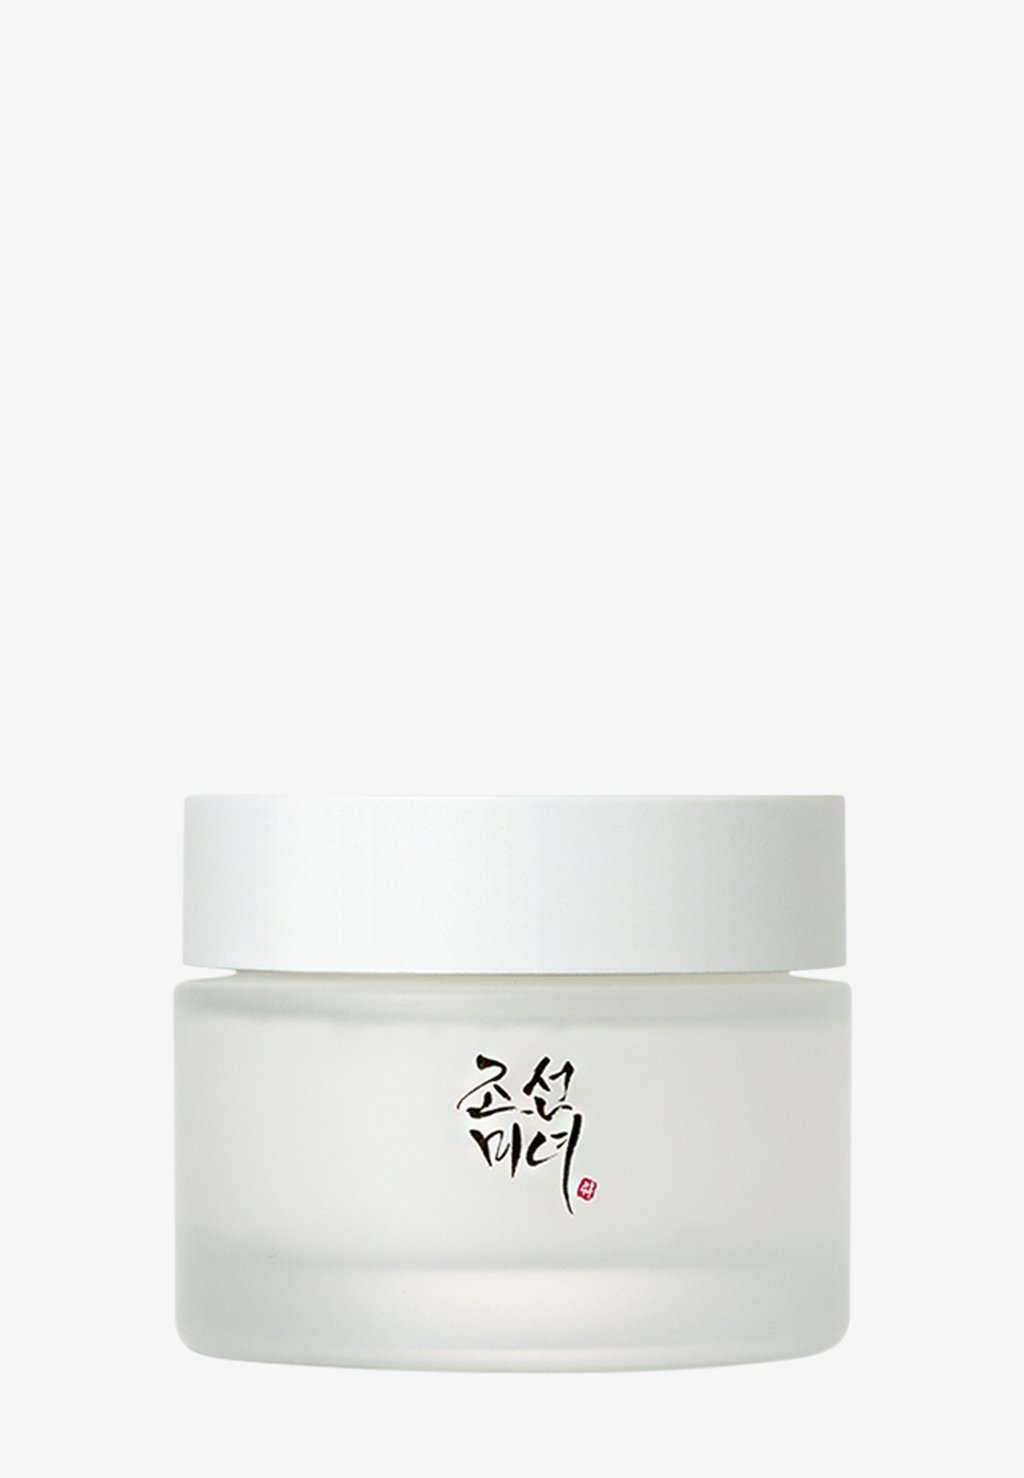 beauty of joseon dynasty cream 1 69 fl oz 50ml Крем для лица DYNASTY CREAM Beauty of Joseon